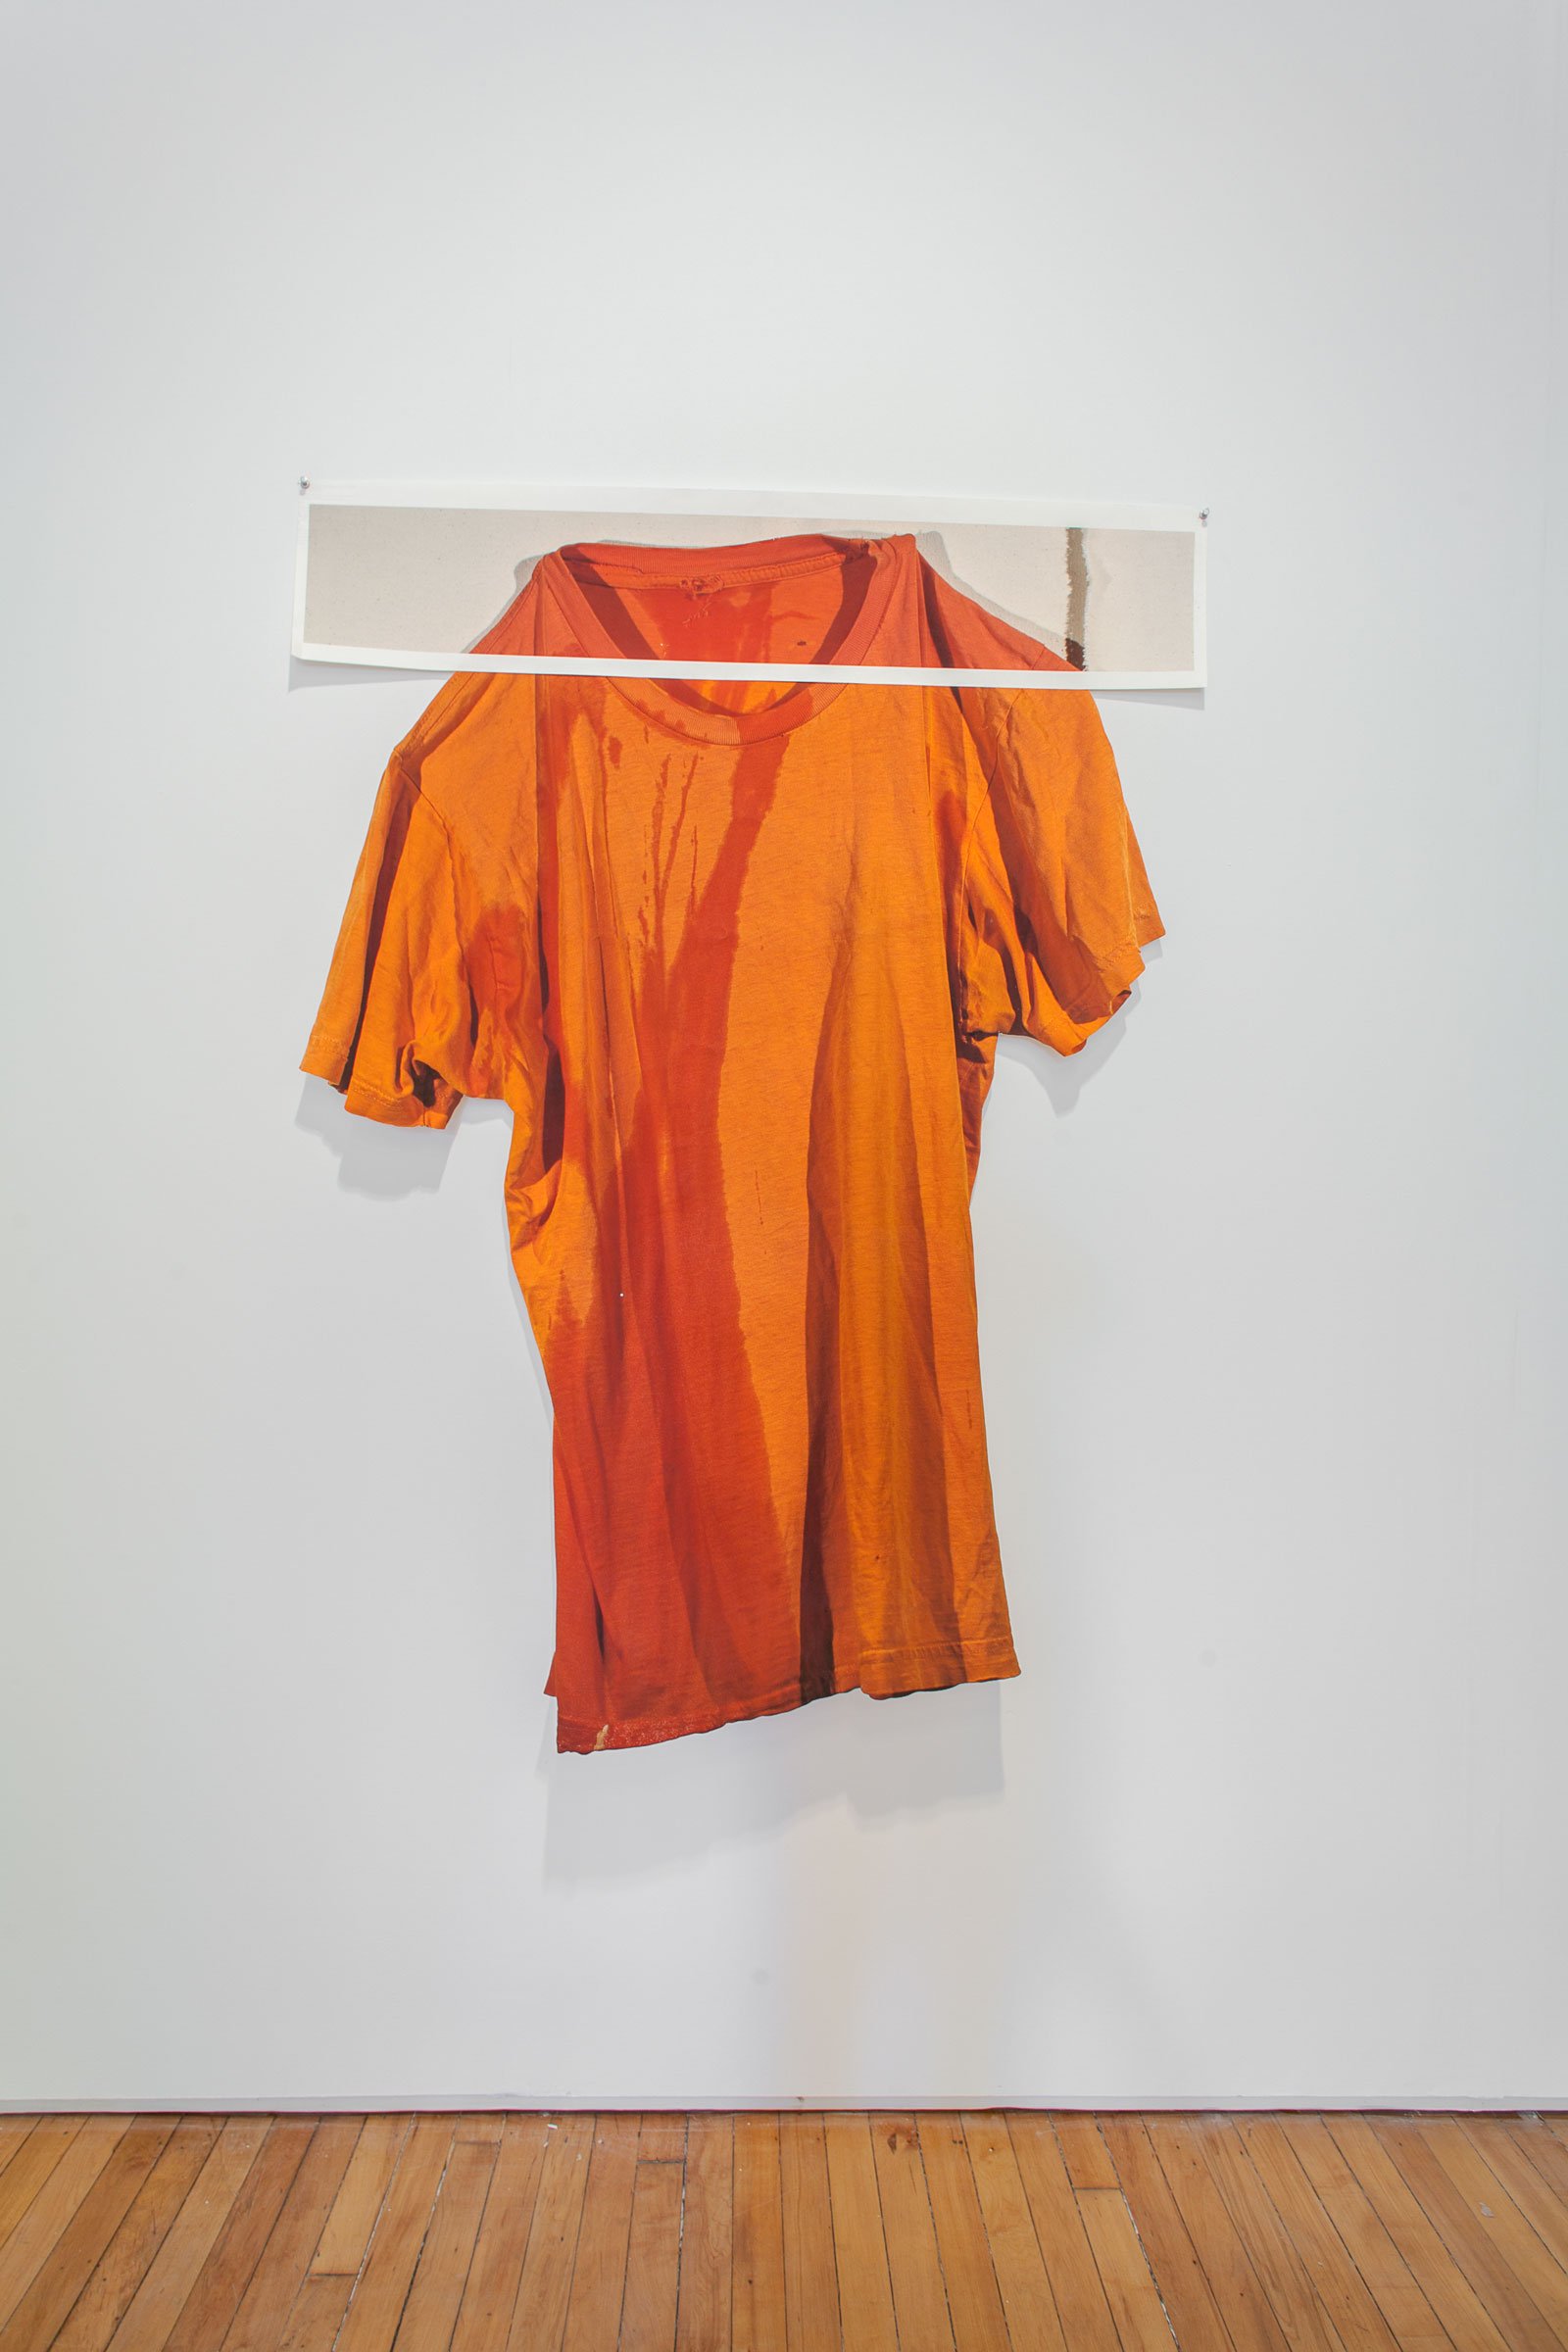 Orange T-Shirt, 2014